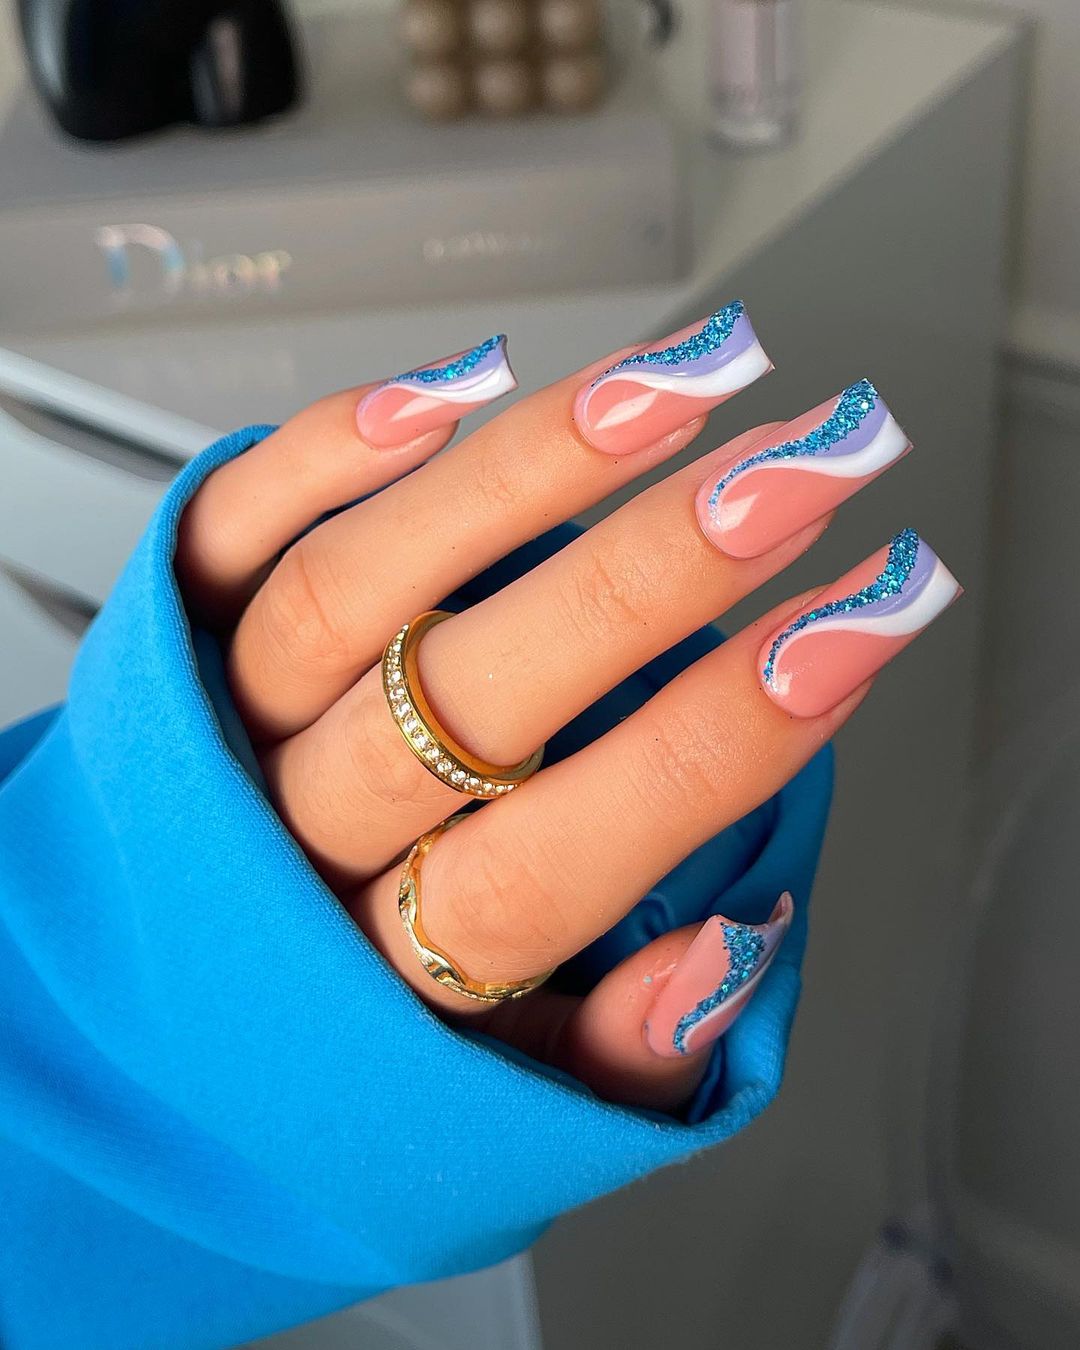 Vierkante nude nagels met blauw wervelend ontwerp